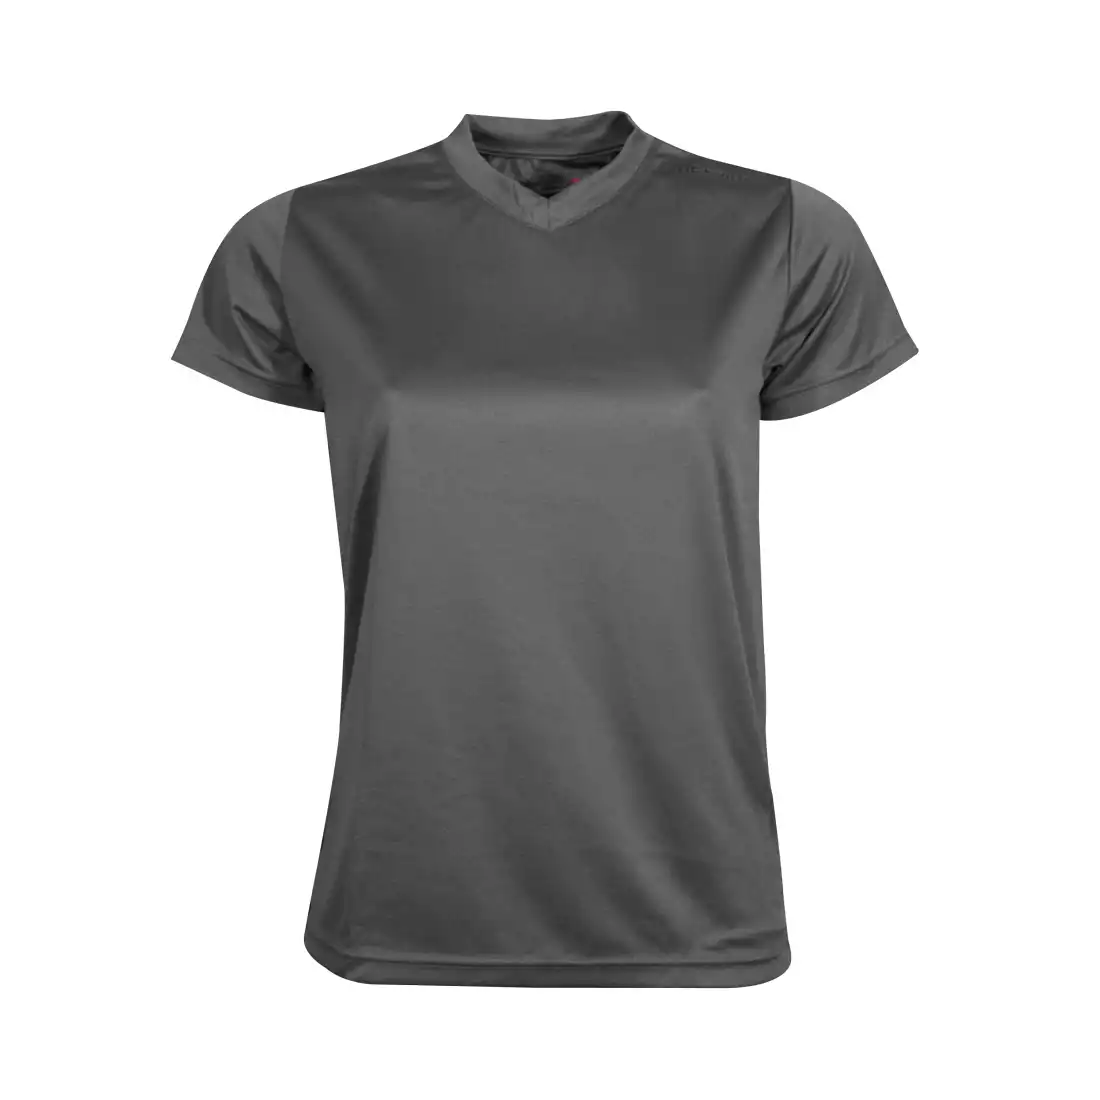 NEWLINE BASE COOL T-SHIRT - damska koszulka do biegania 13614-083